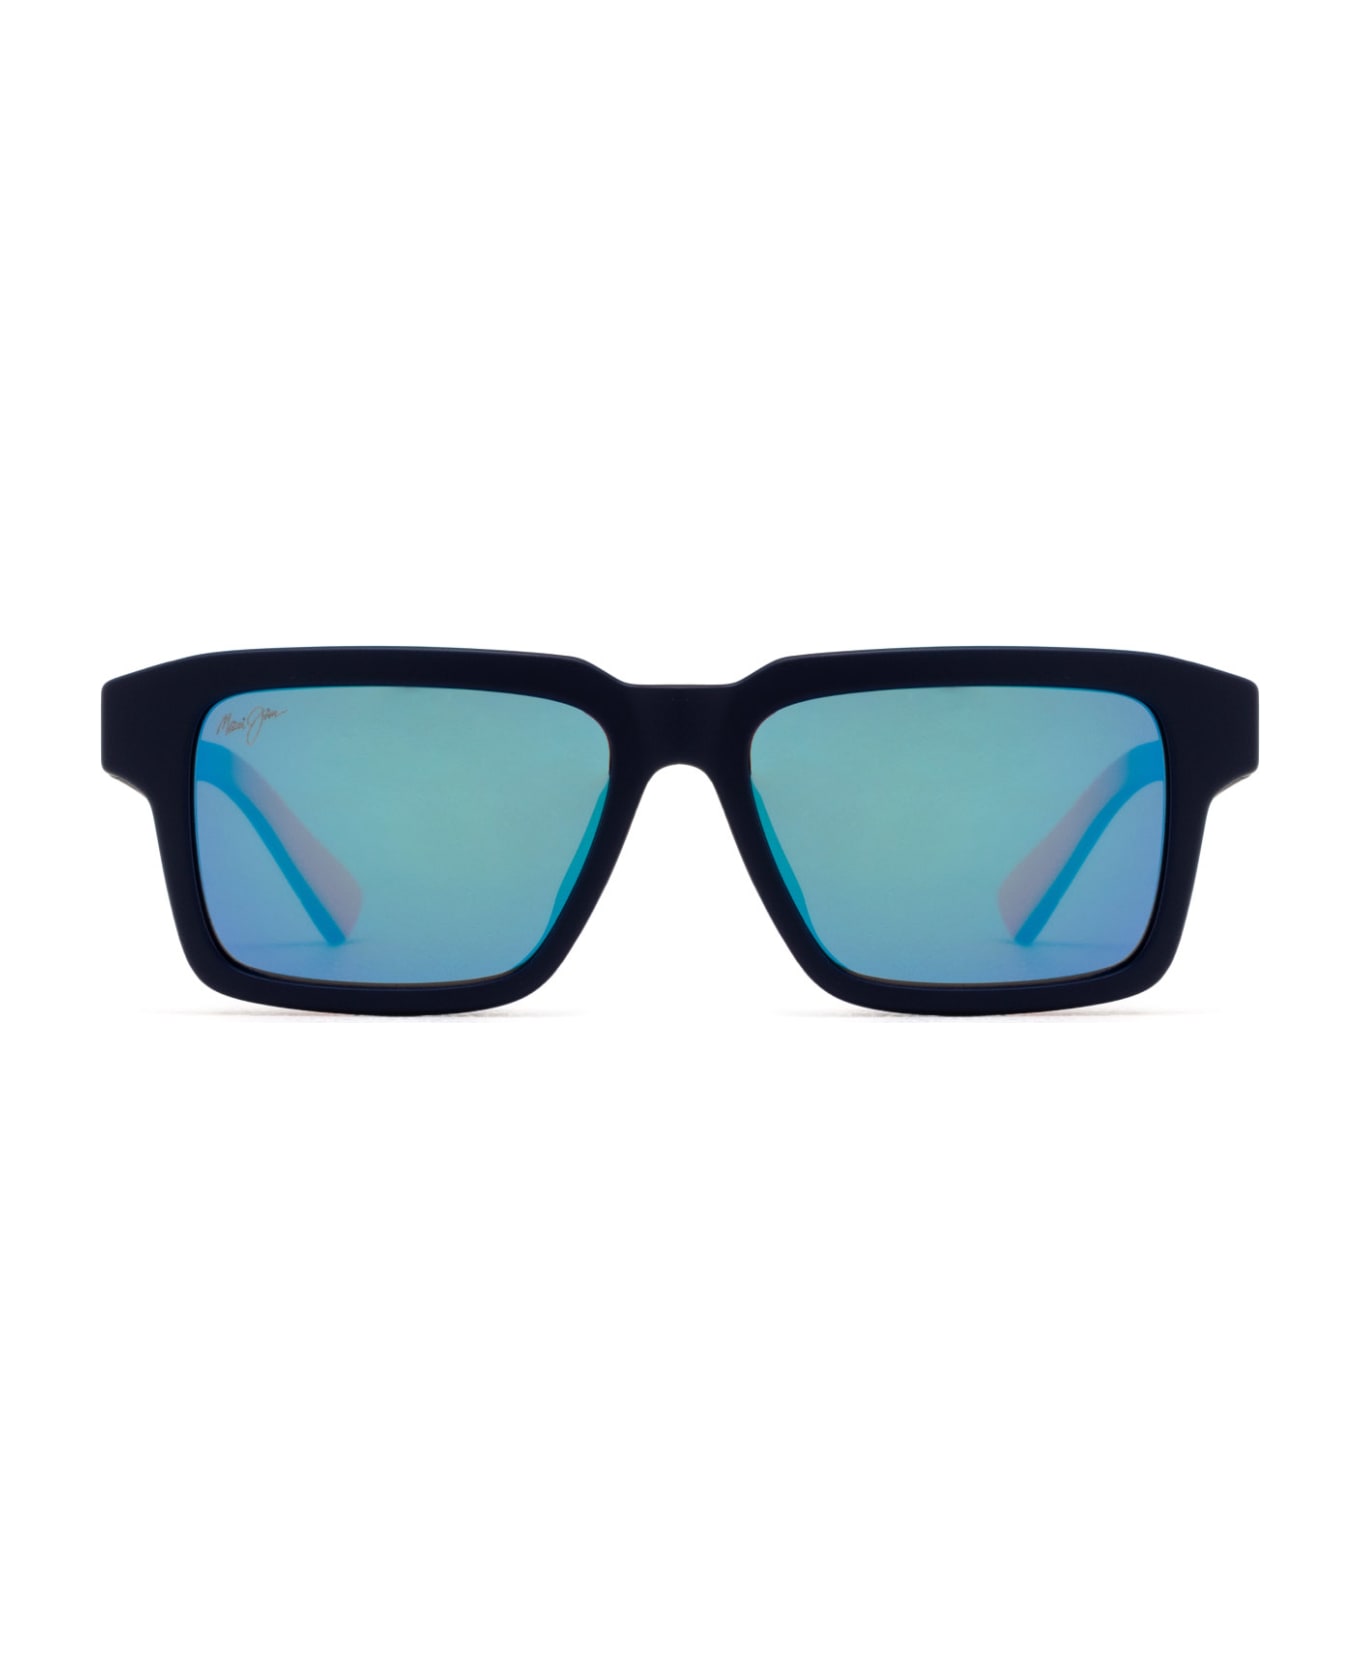 Maui Jim Mj635 Matte Dark Blue Sunglasses - Matte Dark Blue